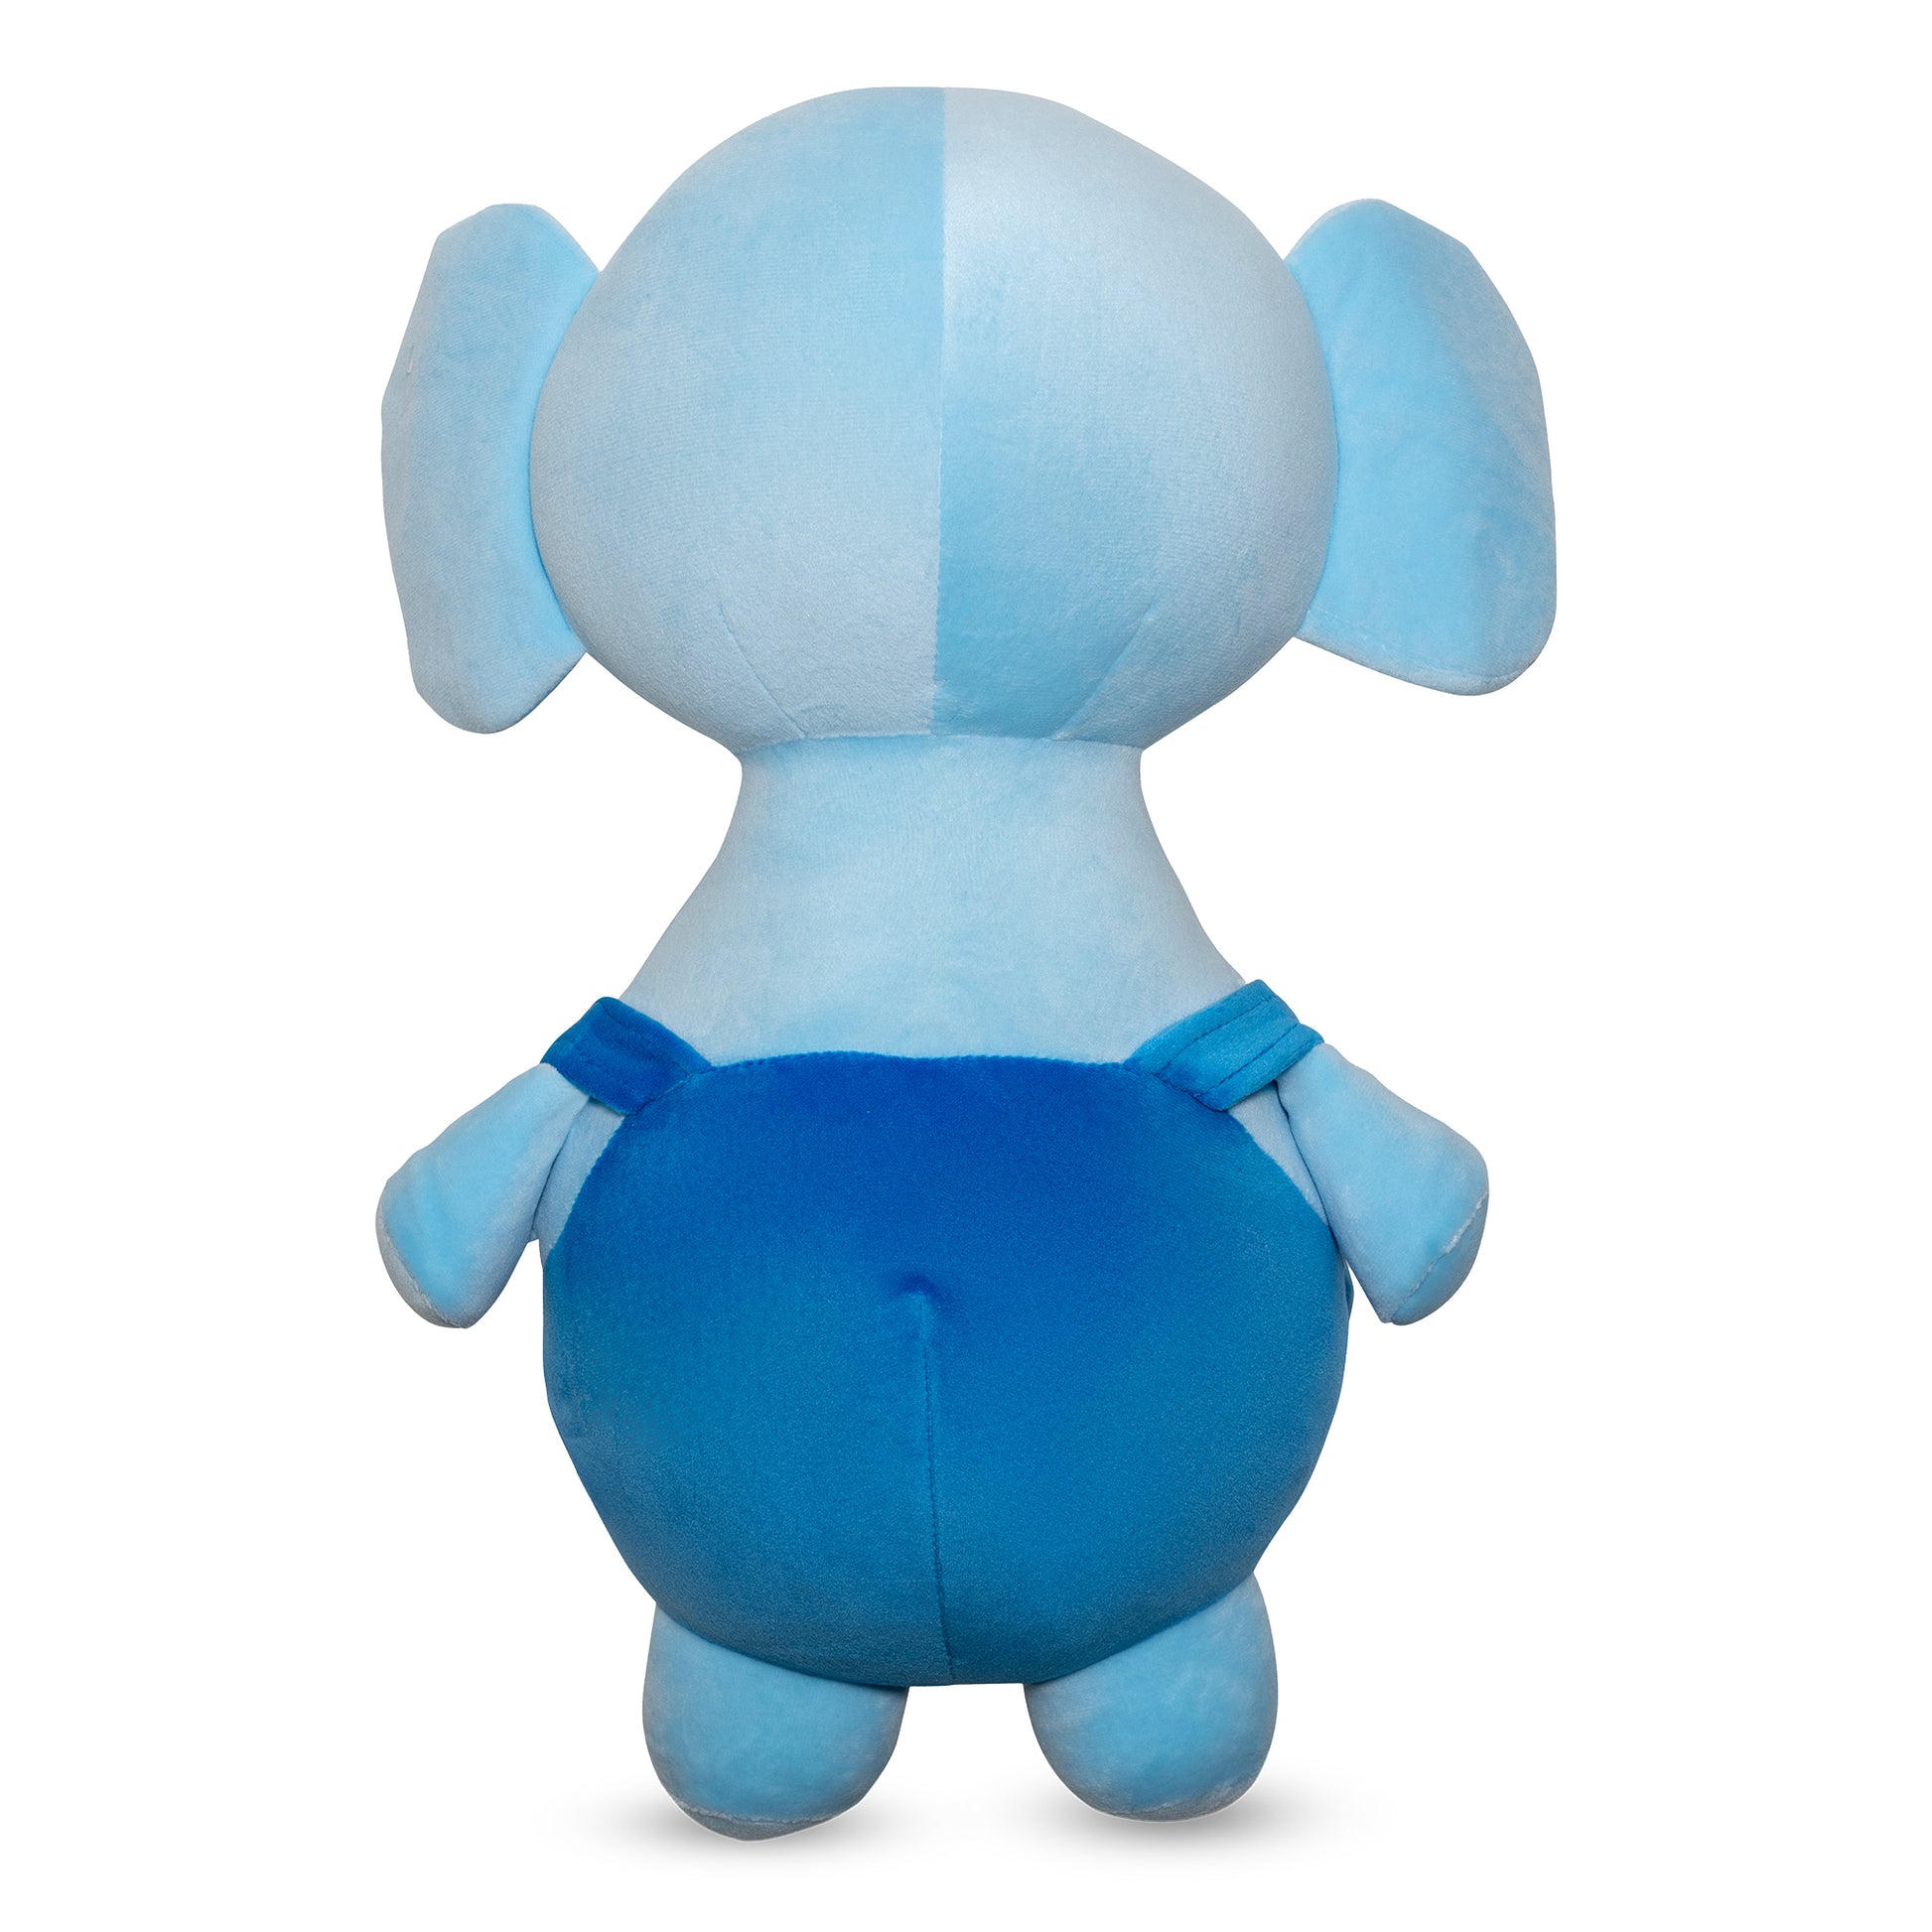 Back view of Happydandis elephant stuffed animal plush toy